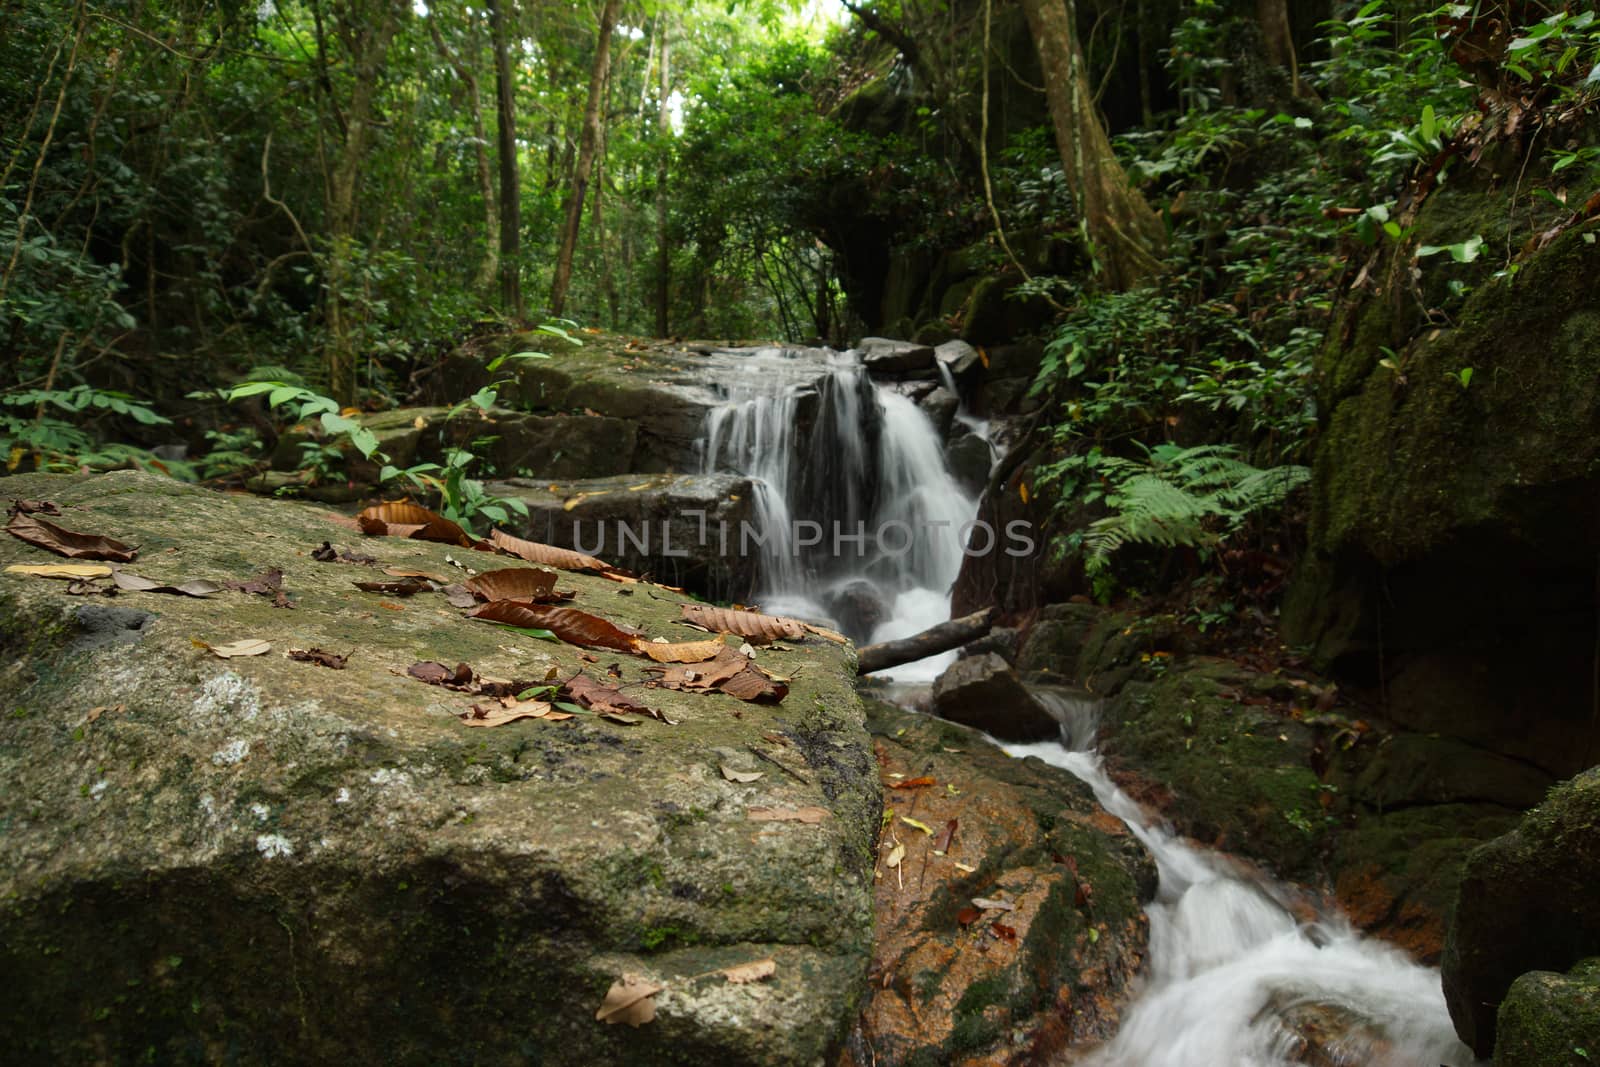 Small waterfall in the rainy season